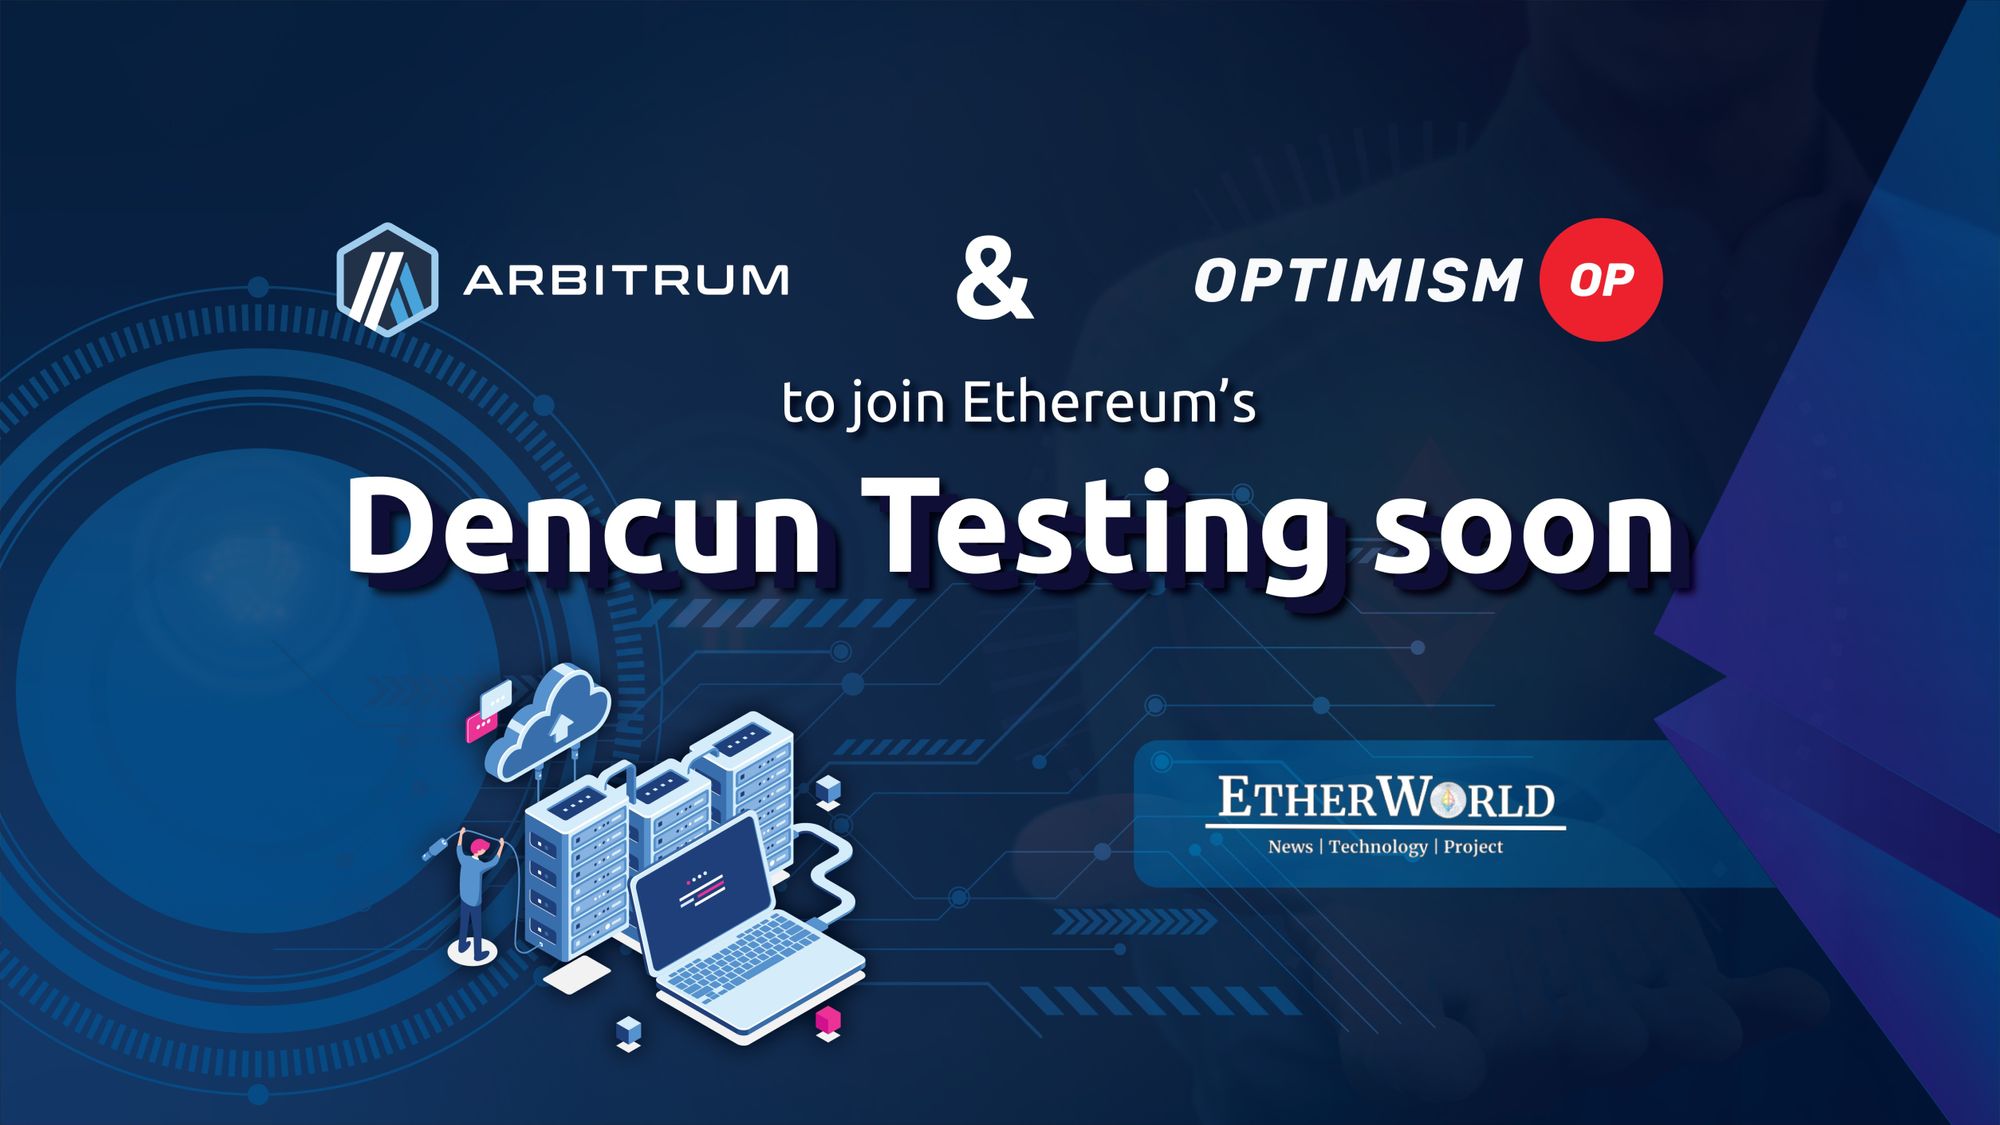 Arbitrum & Optimism to join Ethereum’s Dencun Testing soon